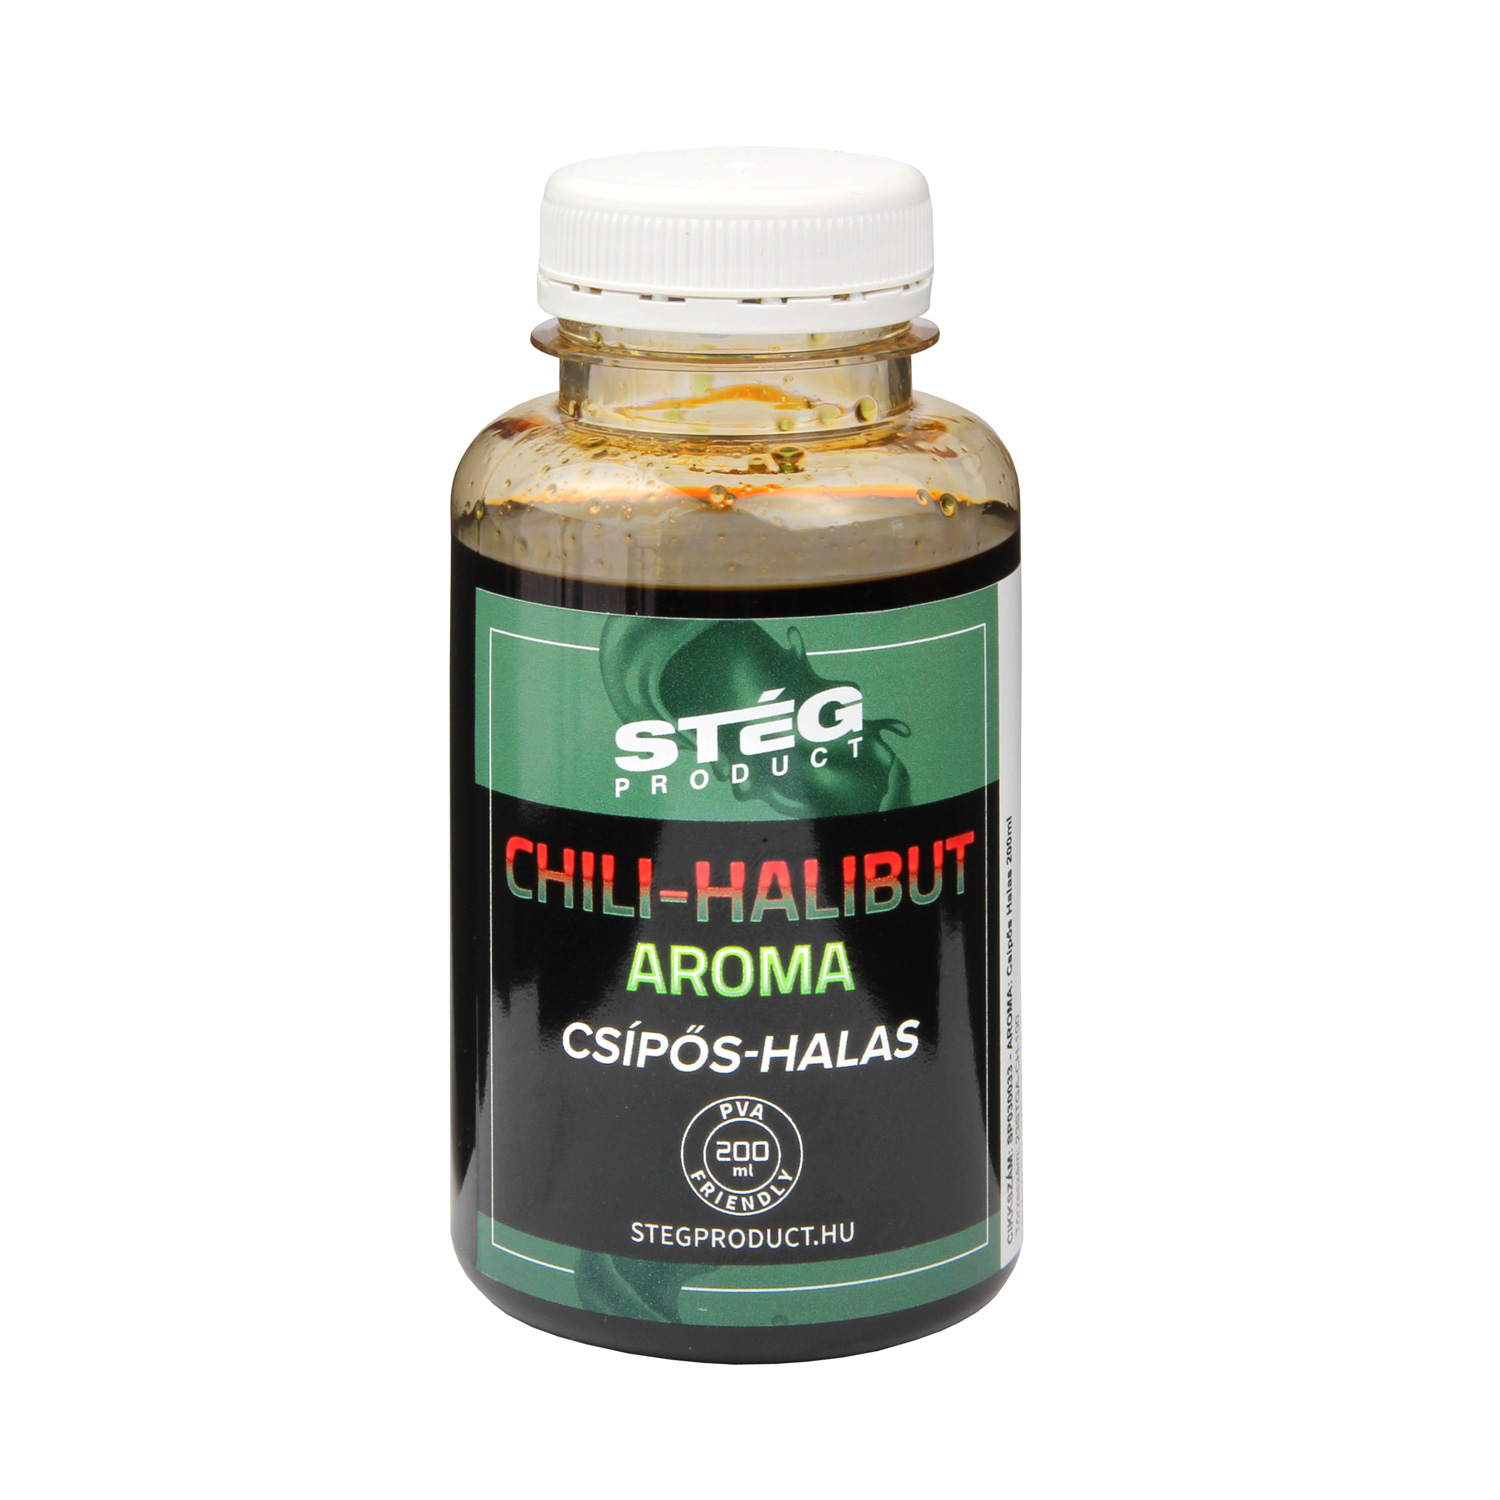 Stg  Aroma Chili-Halibut 200ml